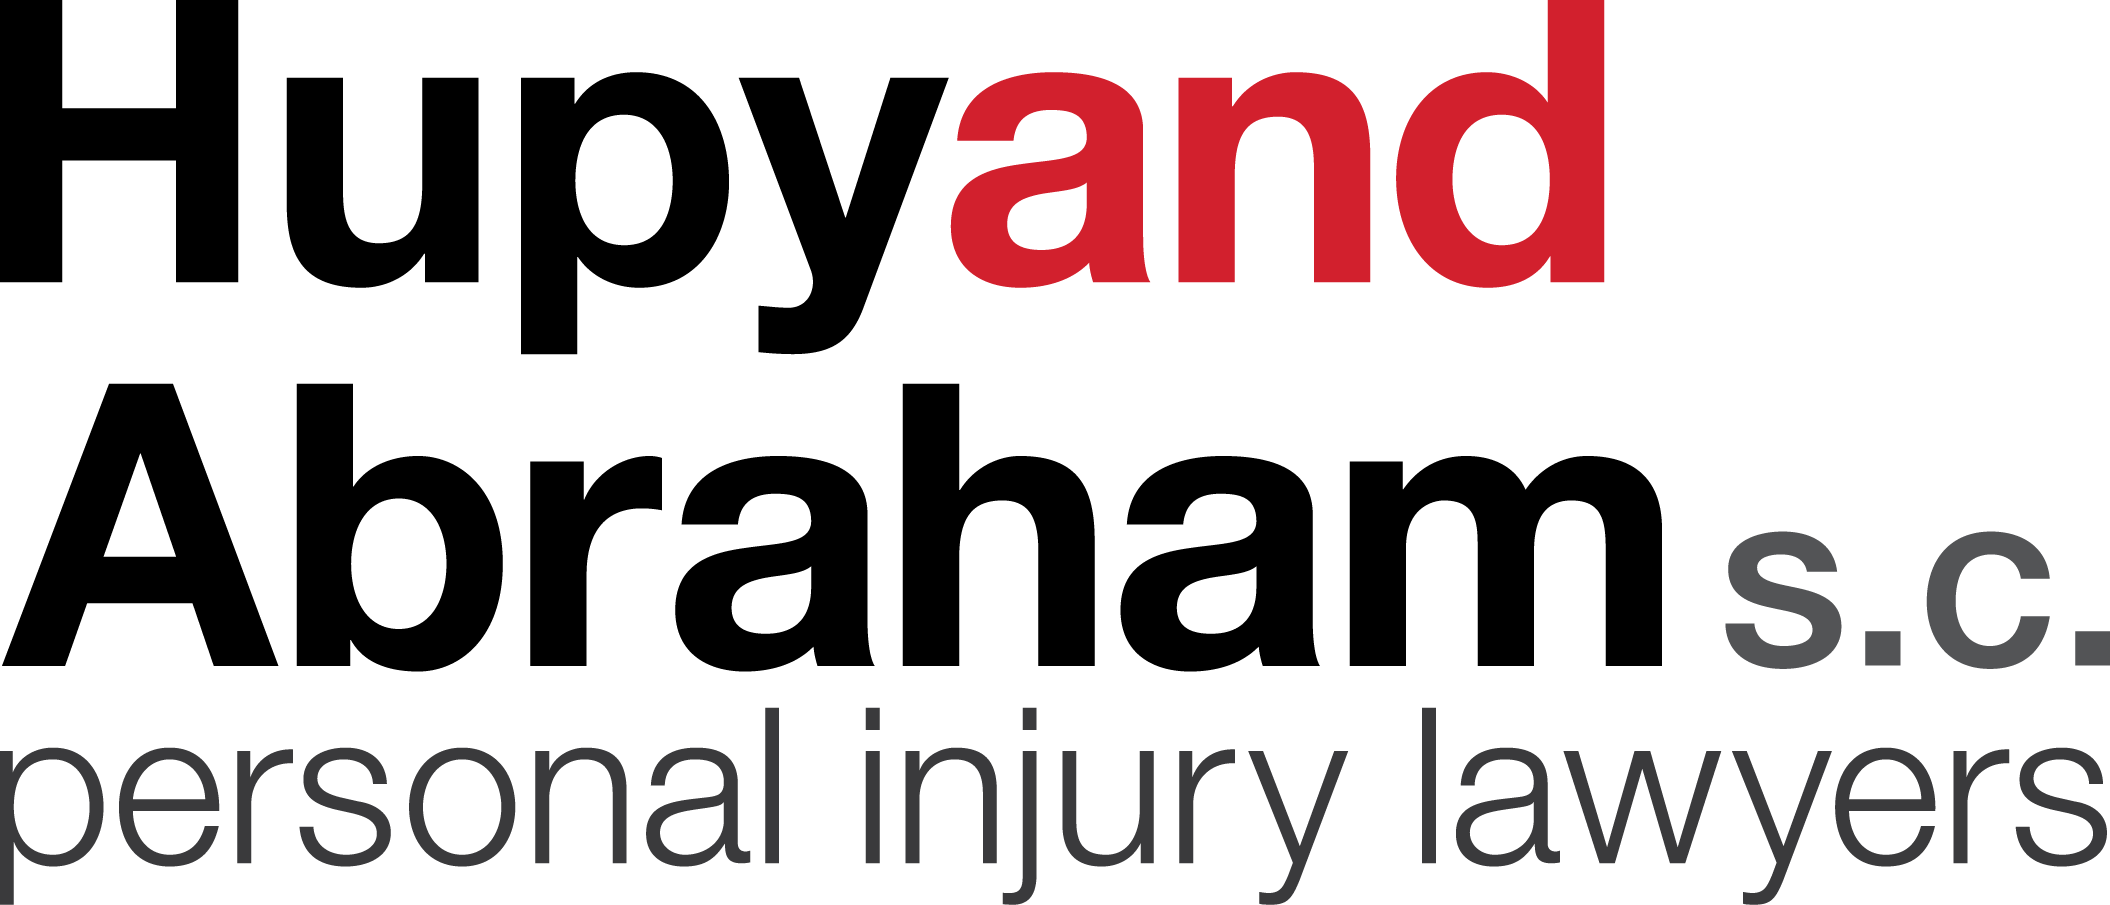 Hupy & Abraham S.C., personal injury lawyers